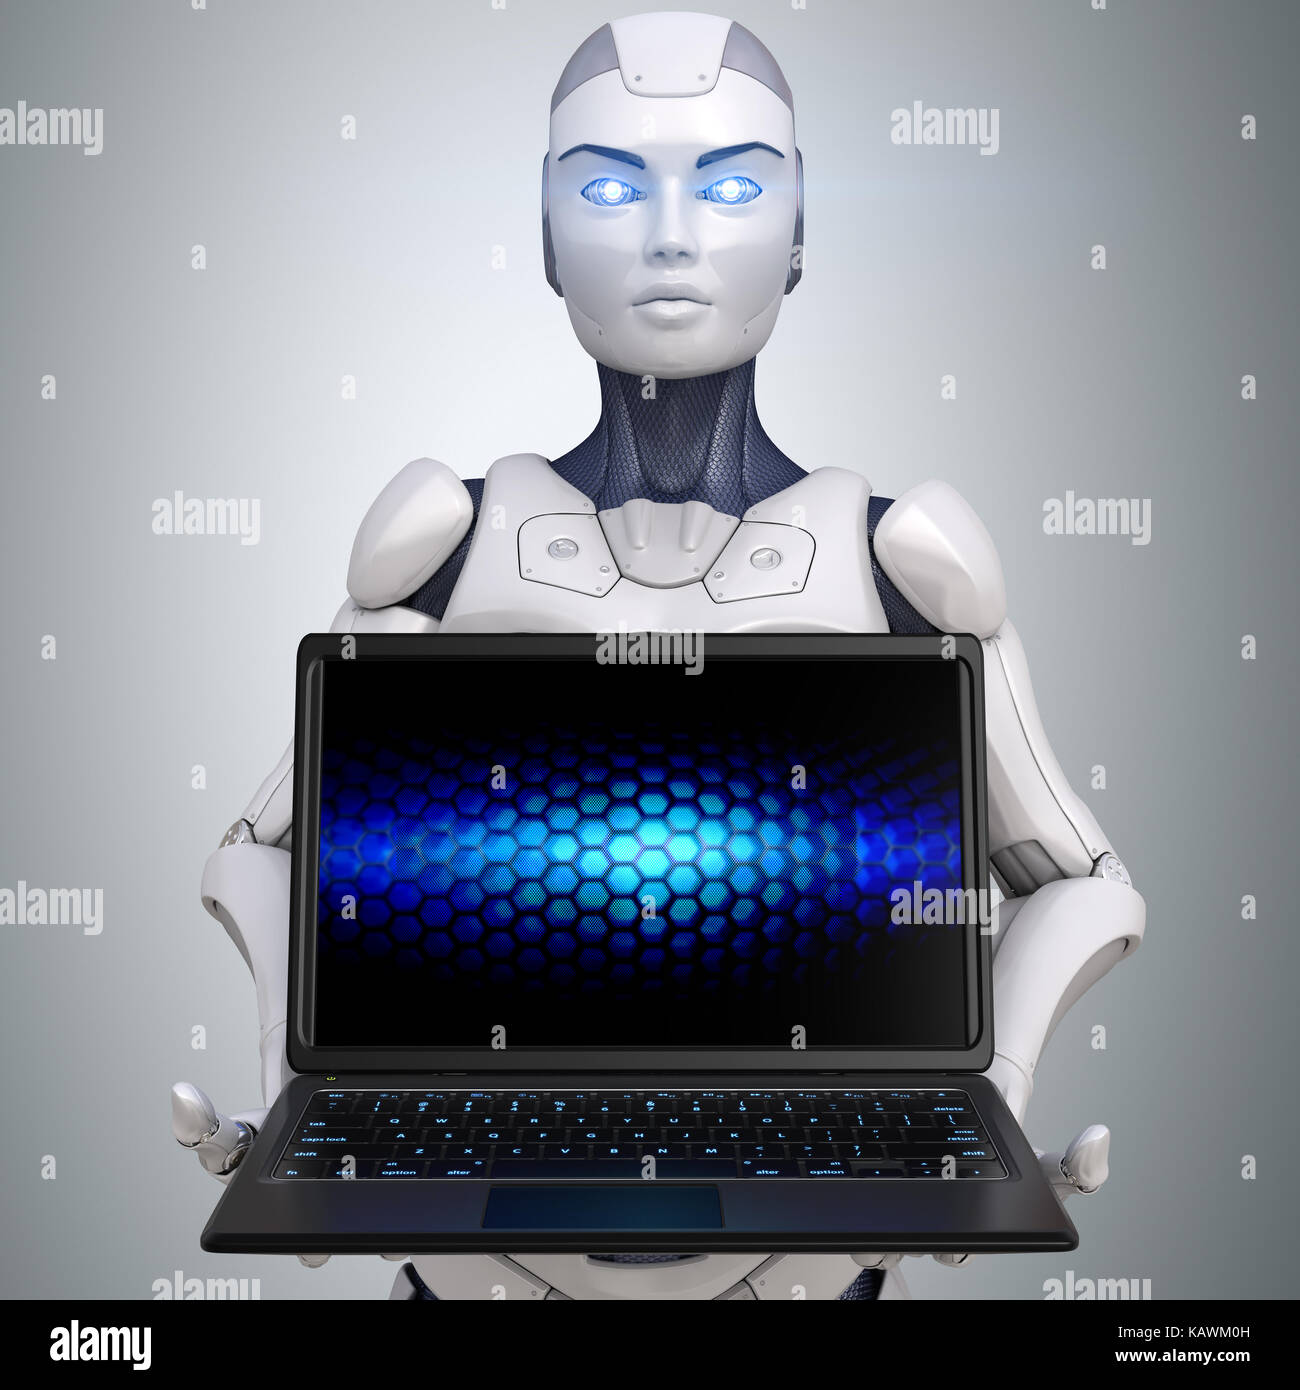 Robot holding a laptop. 3D illustration Stock Photo